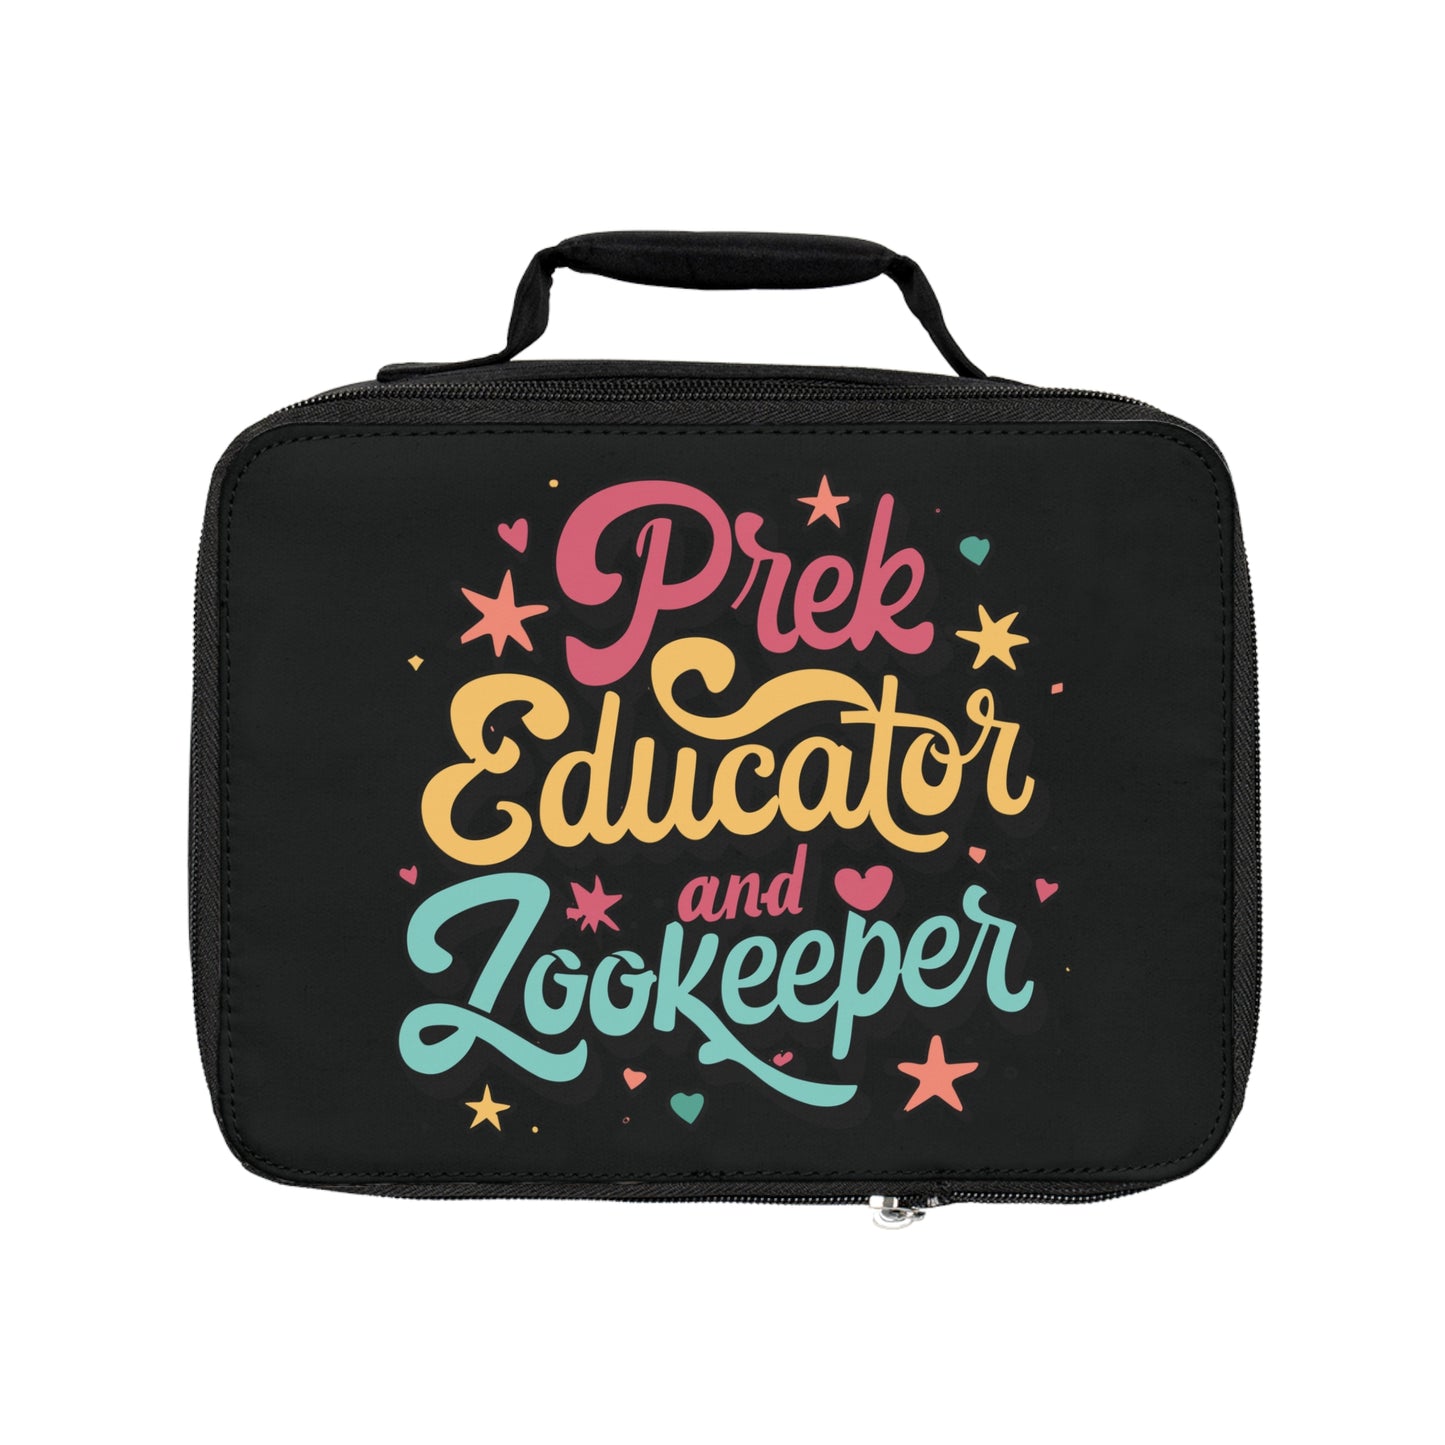 PreK Teacher Lunch Bag - "PreK Educator and Zookeeper"